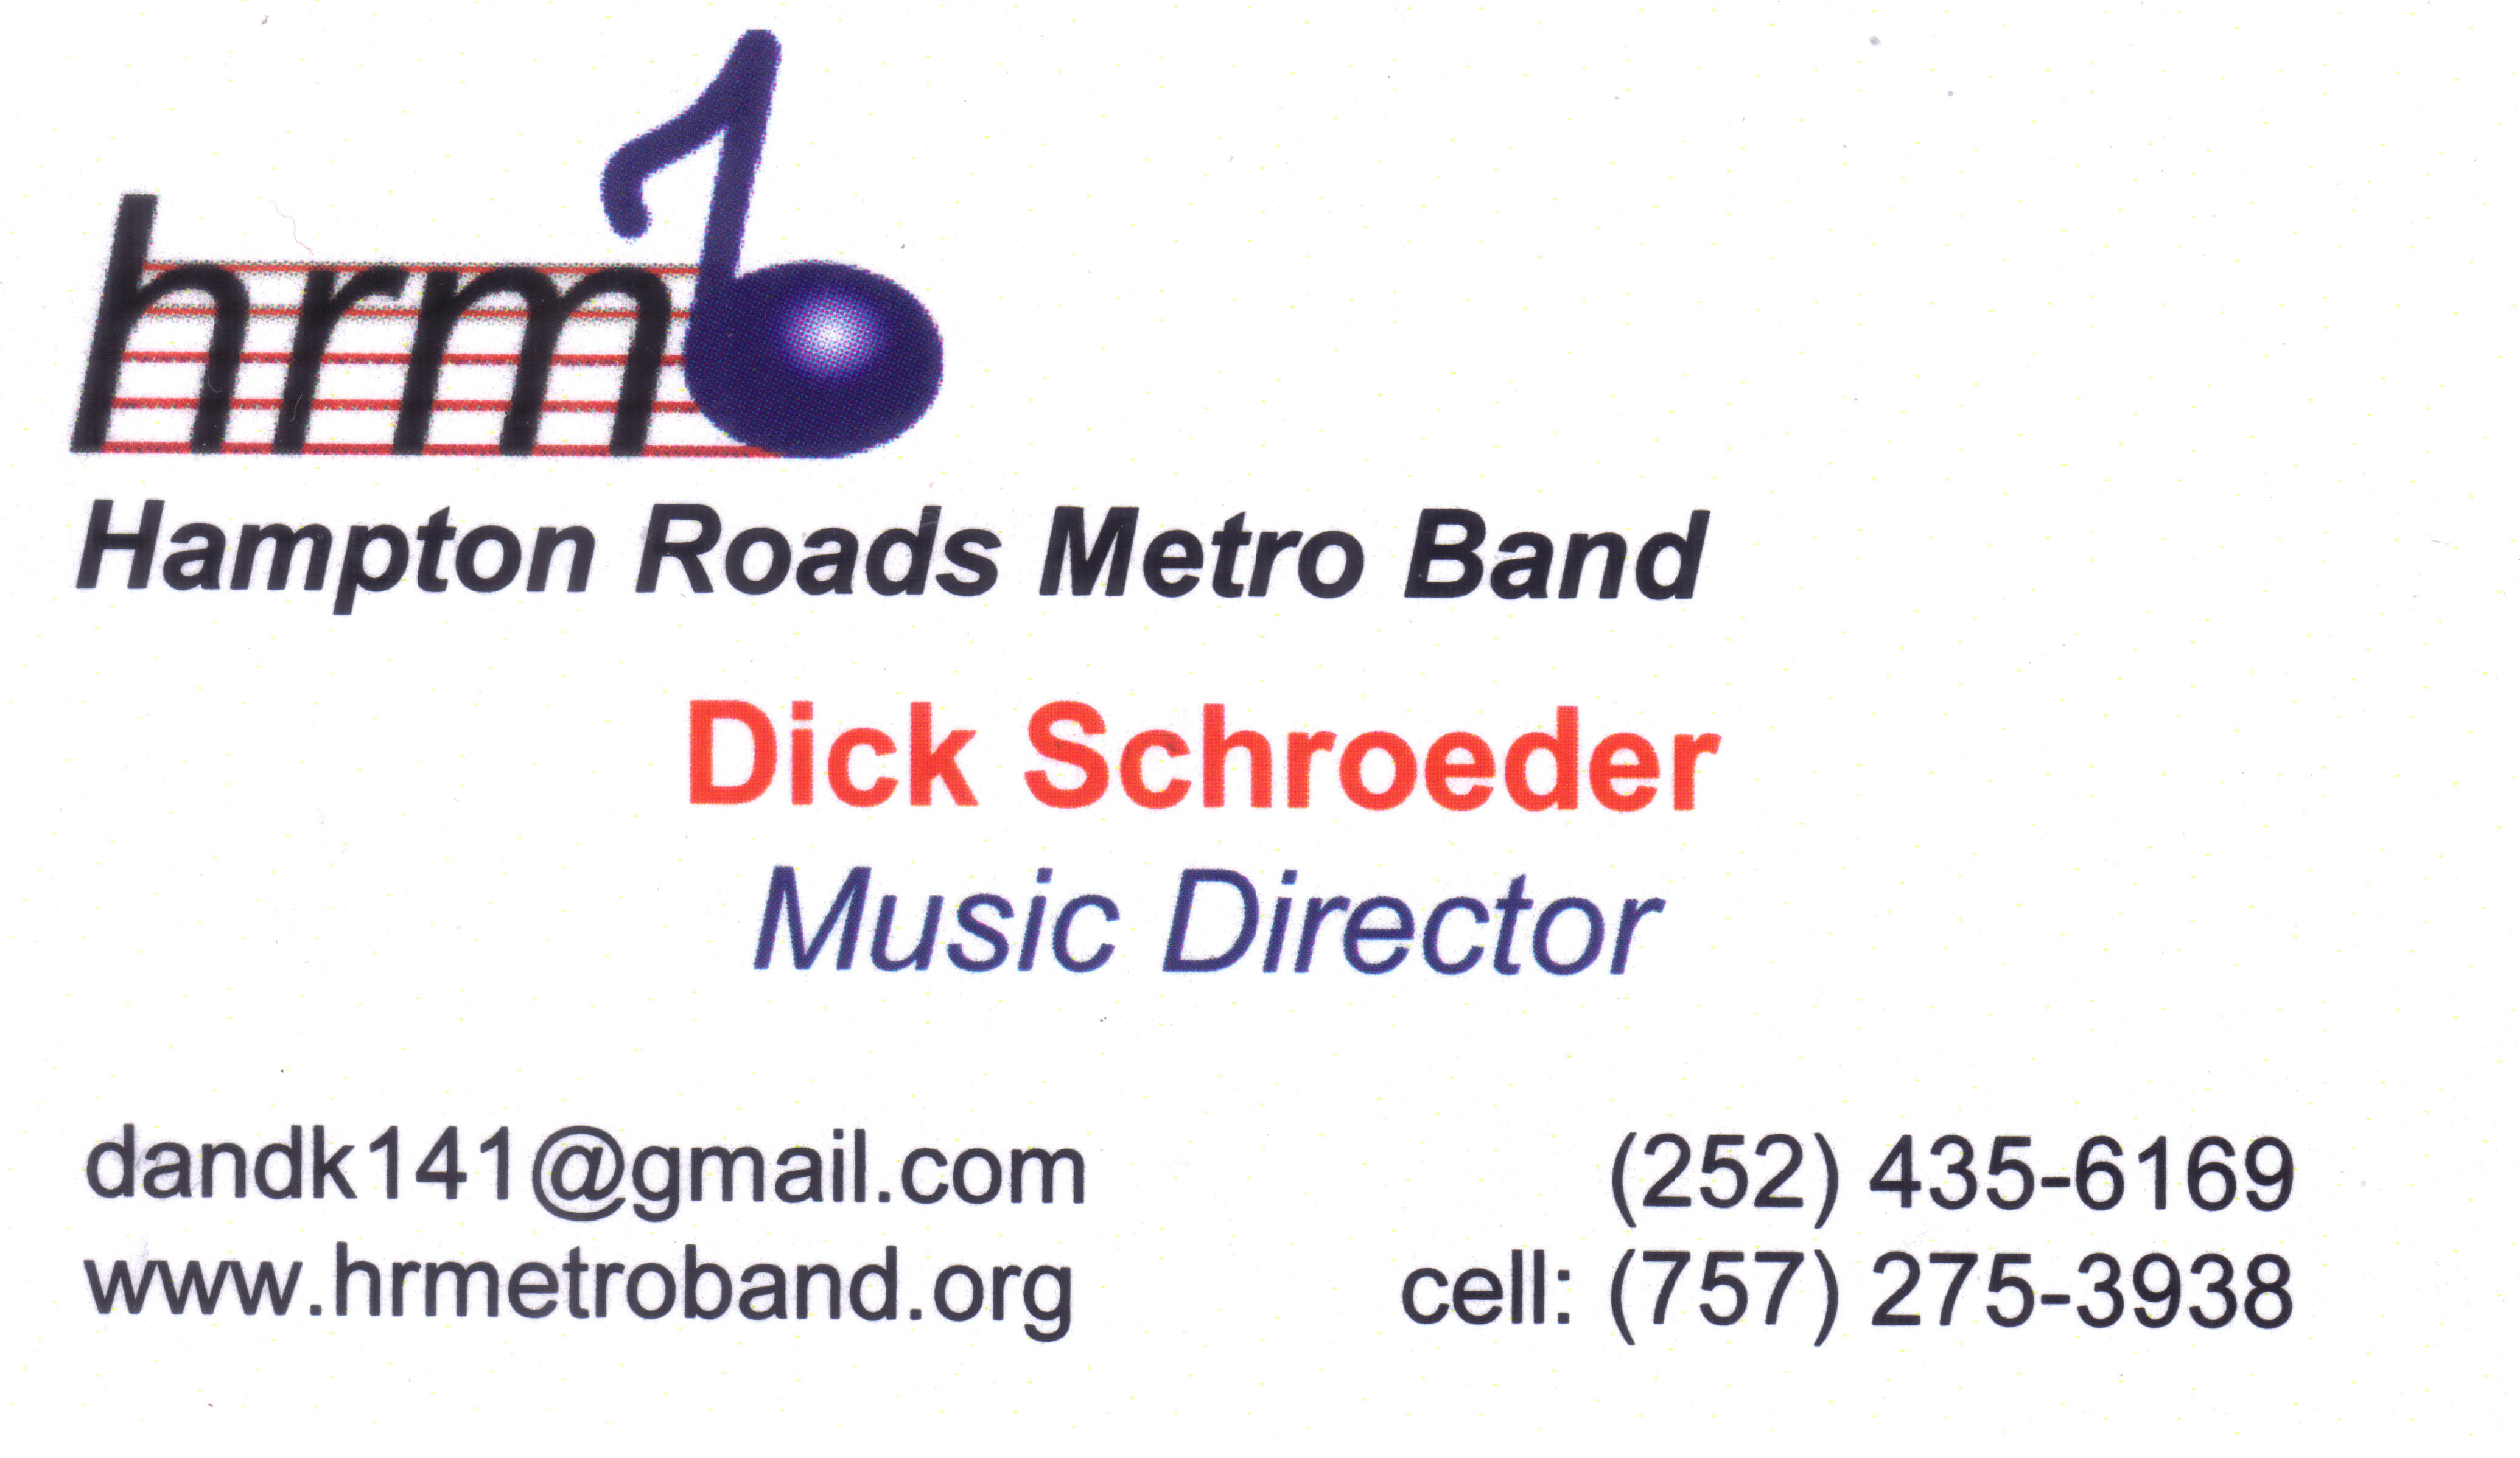 Hampton Roads Metro Band - Dick Schroeder